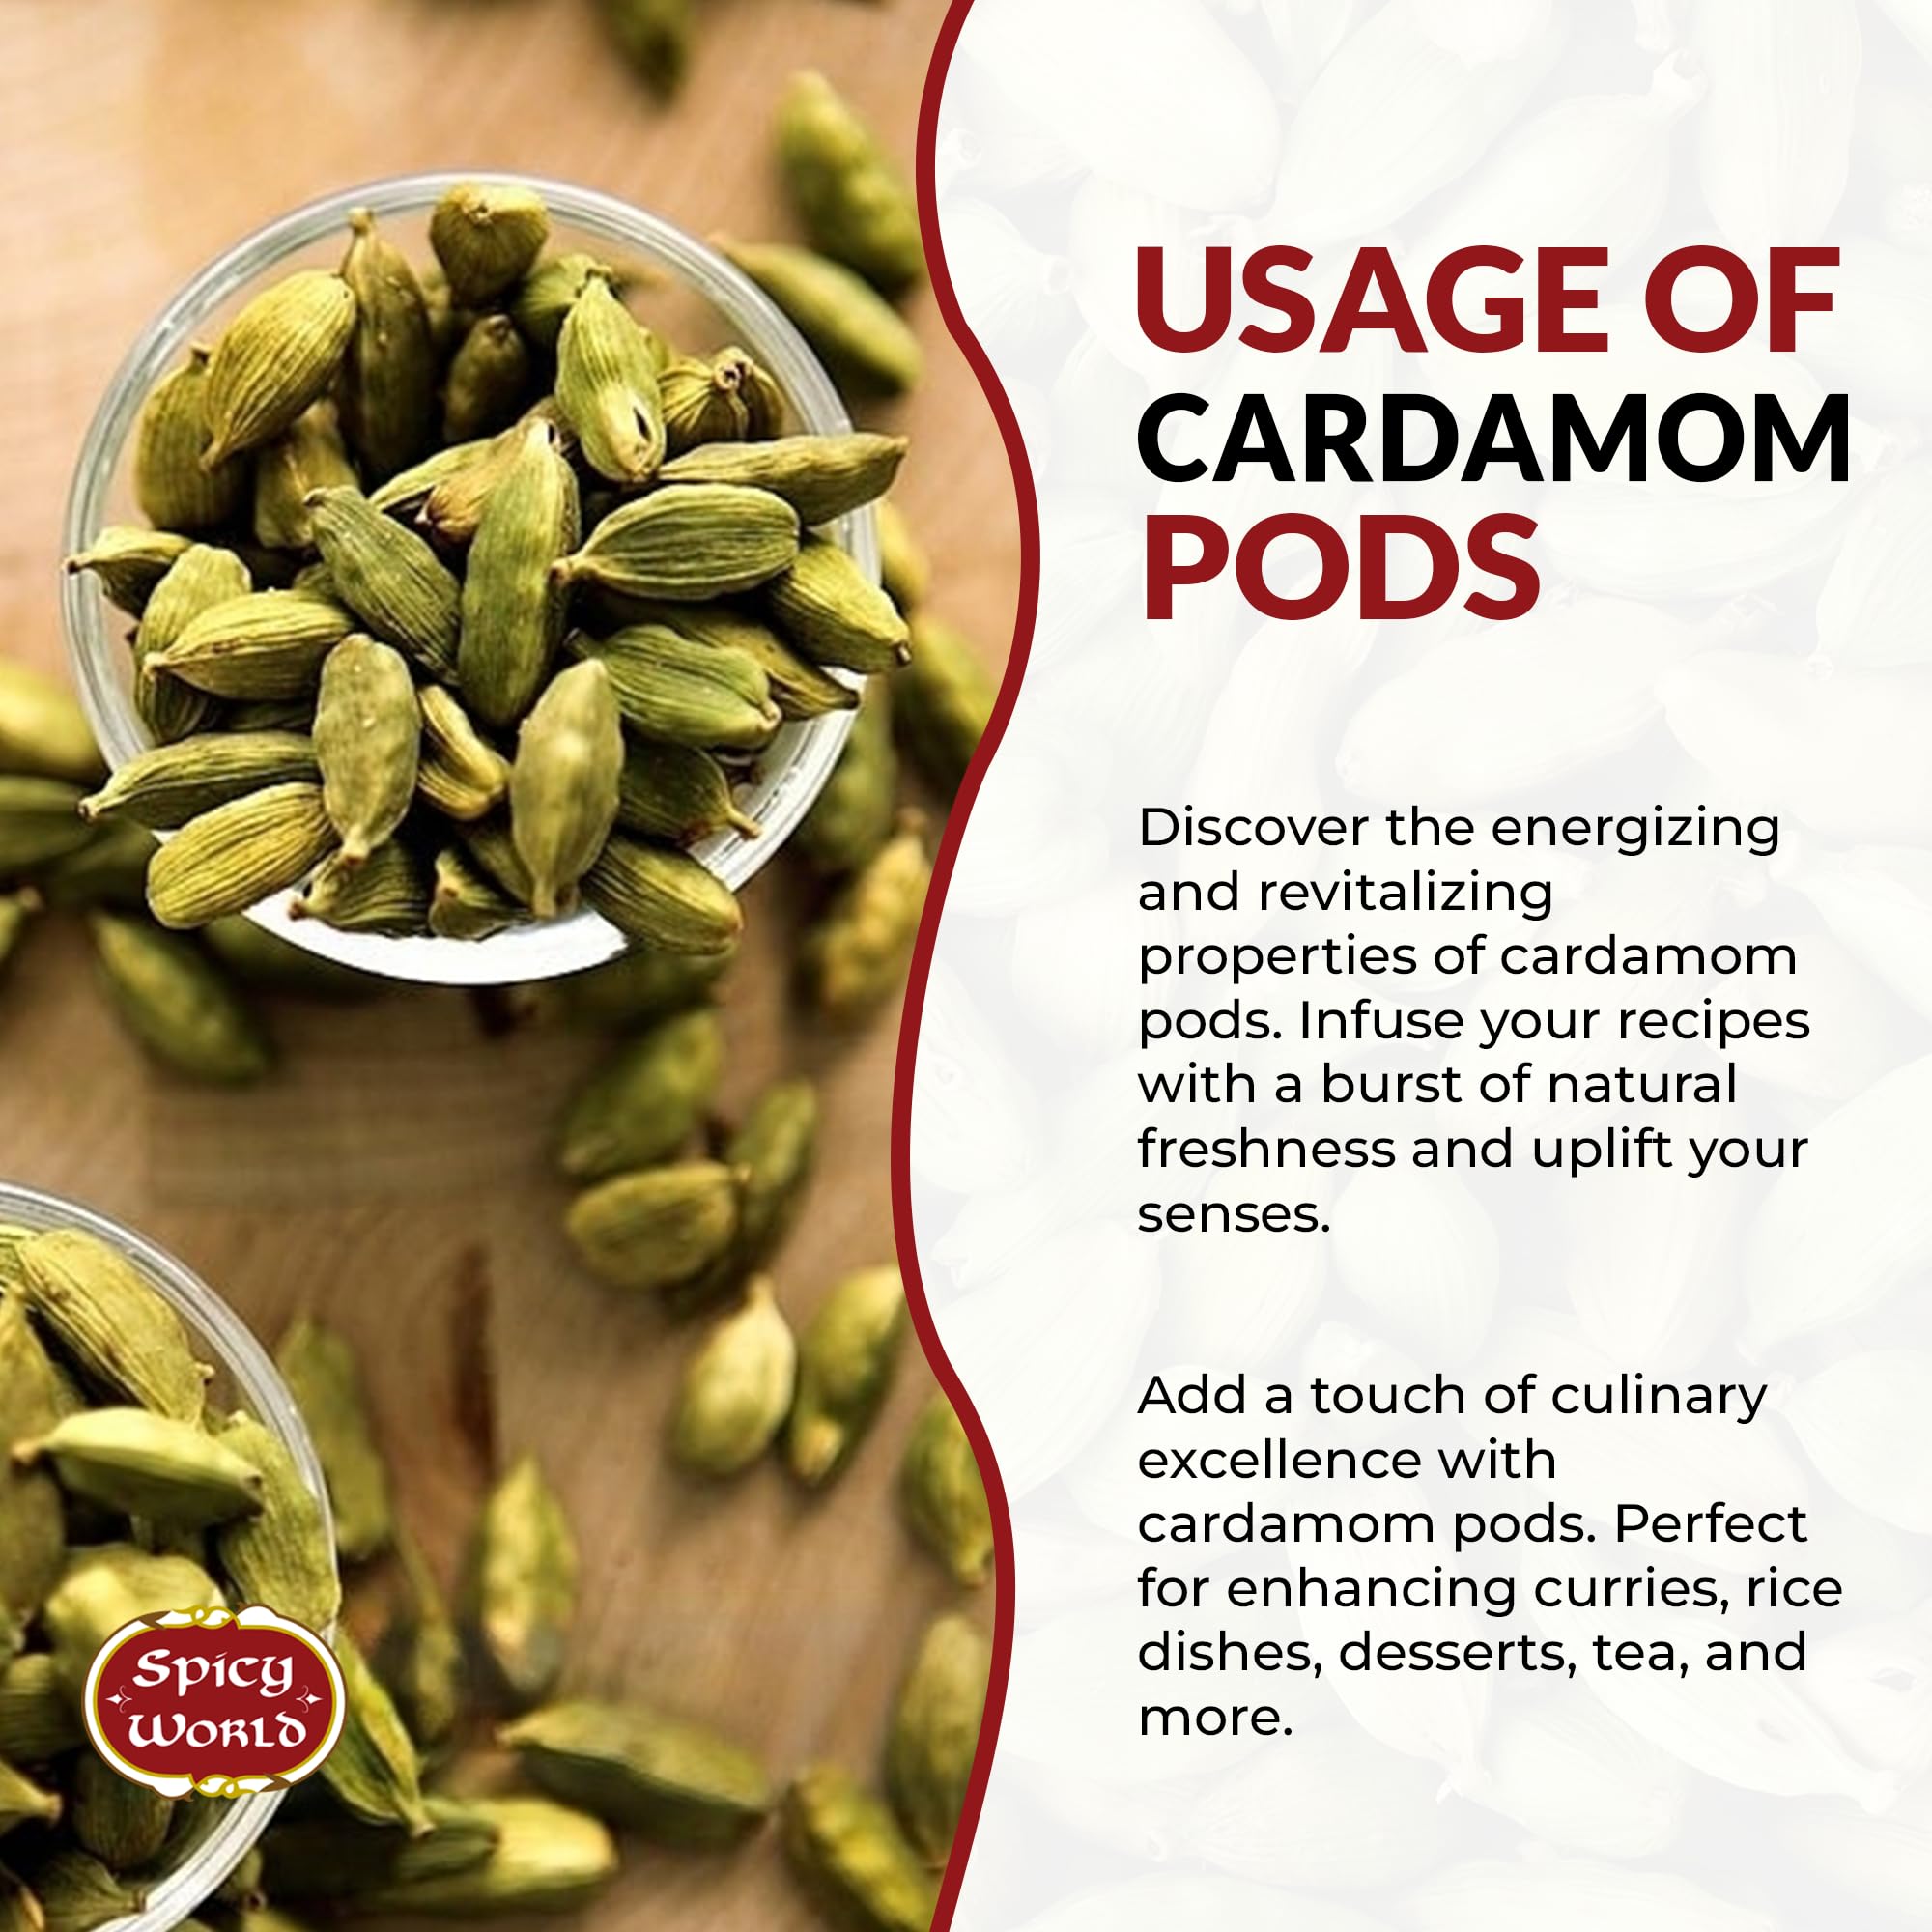 Spicy World Green Cardamom Pods 3.5 Oz - As Seen on Tik Tok - Premium Quality Whole Green Cardamom Pods | Vegan | Large | Aromatic Cardamon